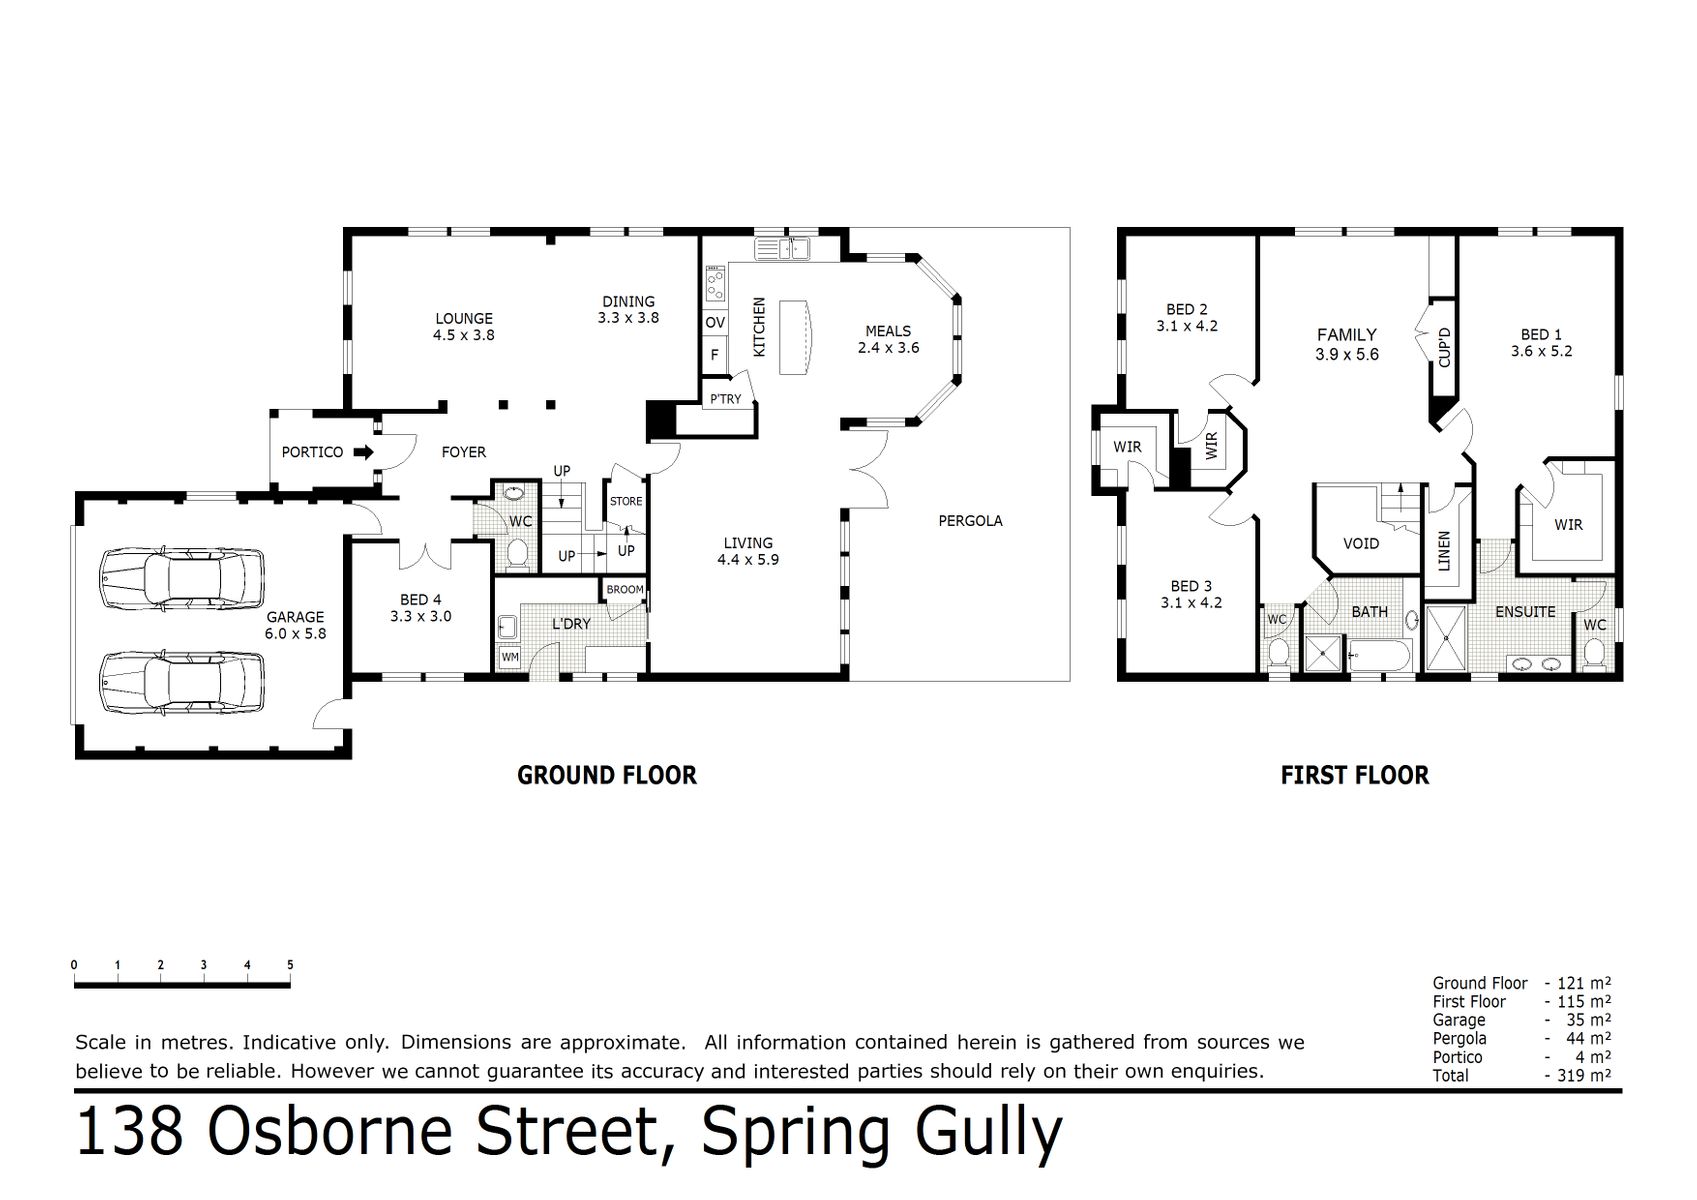 138 Osborne Street Spring Gully (25 NOV 2020) 271sqm